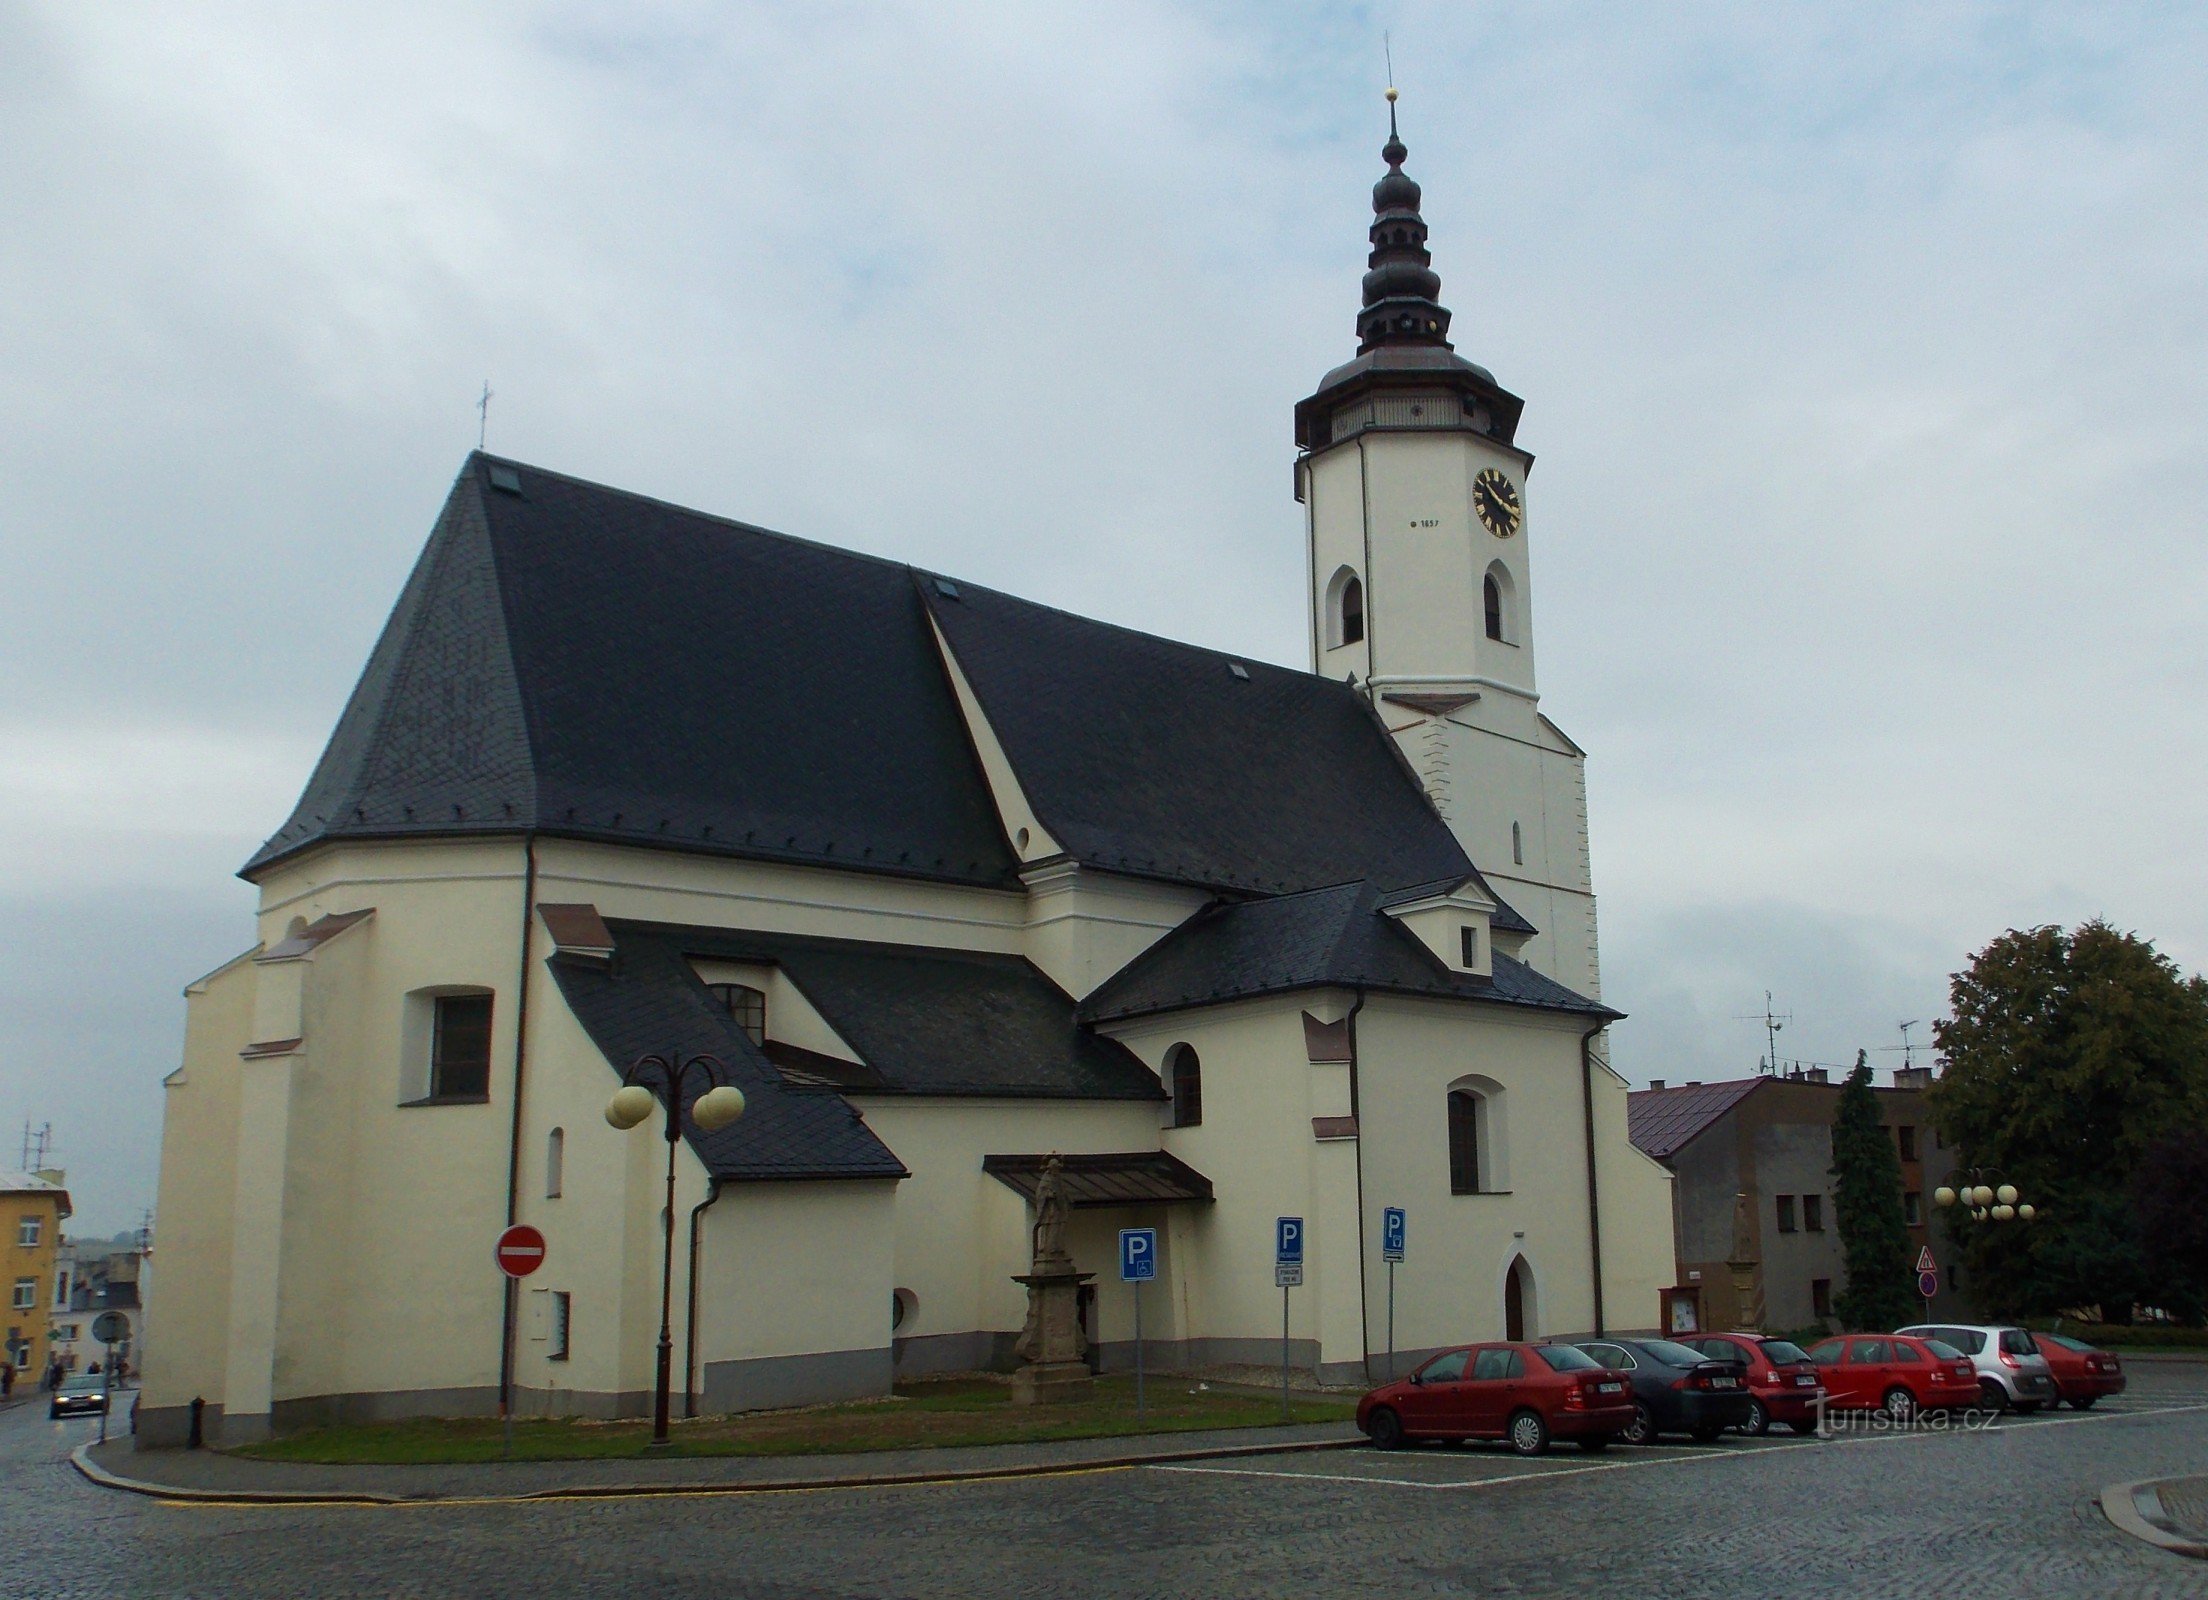 Church of St. Mikuláš - the landmark of Silesian Square in Bílovec